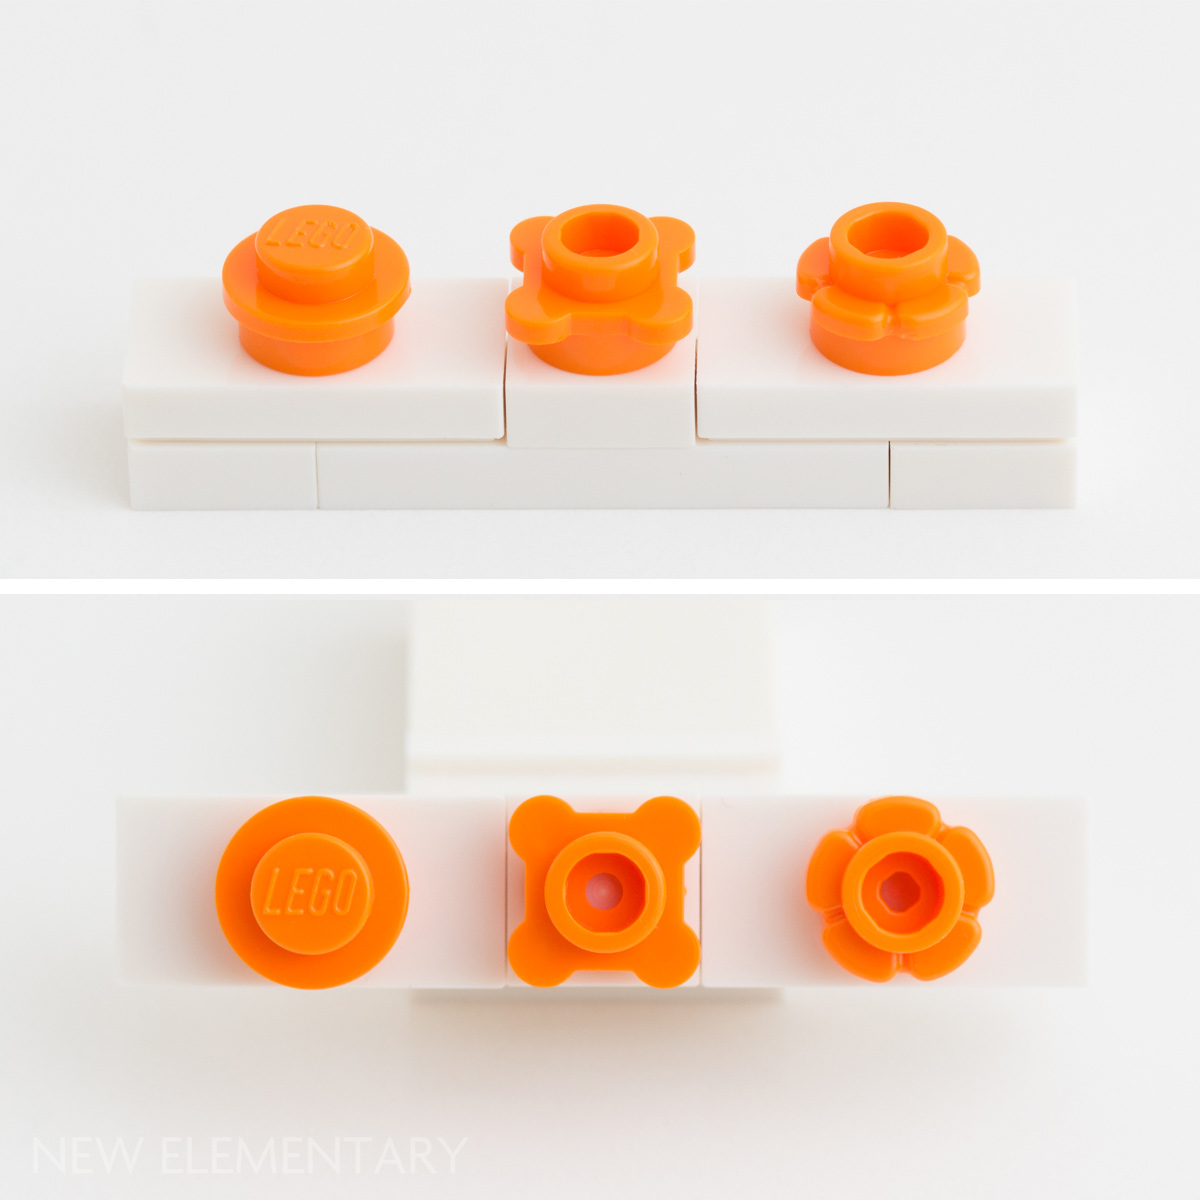 New Orange 24866 Lot of 25 Lego FLOWER EDGE 1x1 with 5 Petals